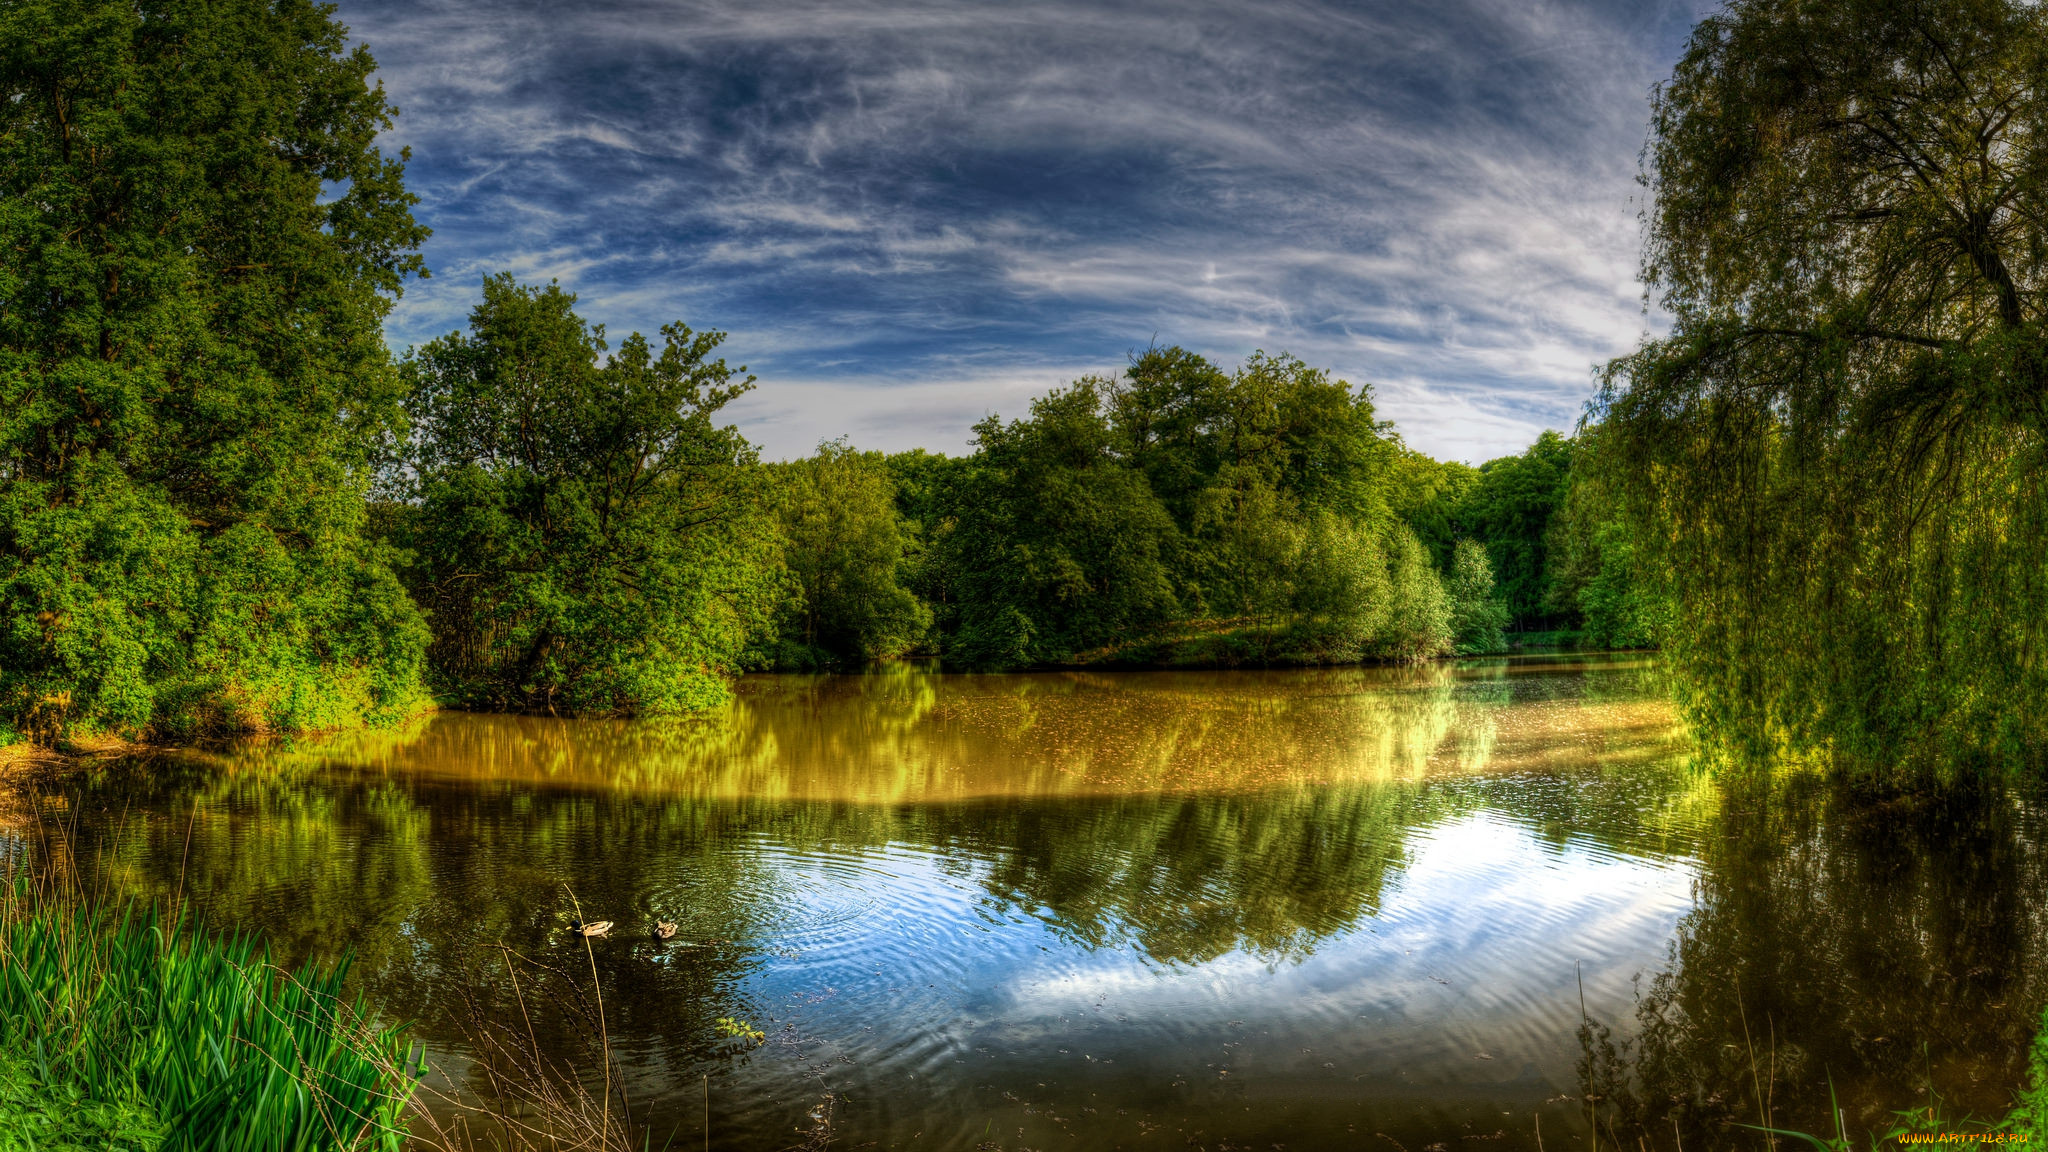 Тема реки и озера. Речные заводи фотопейзажи. Лето лес река. Пейзаж с речкой. Речка лес лето.